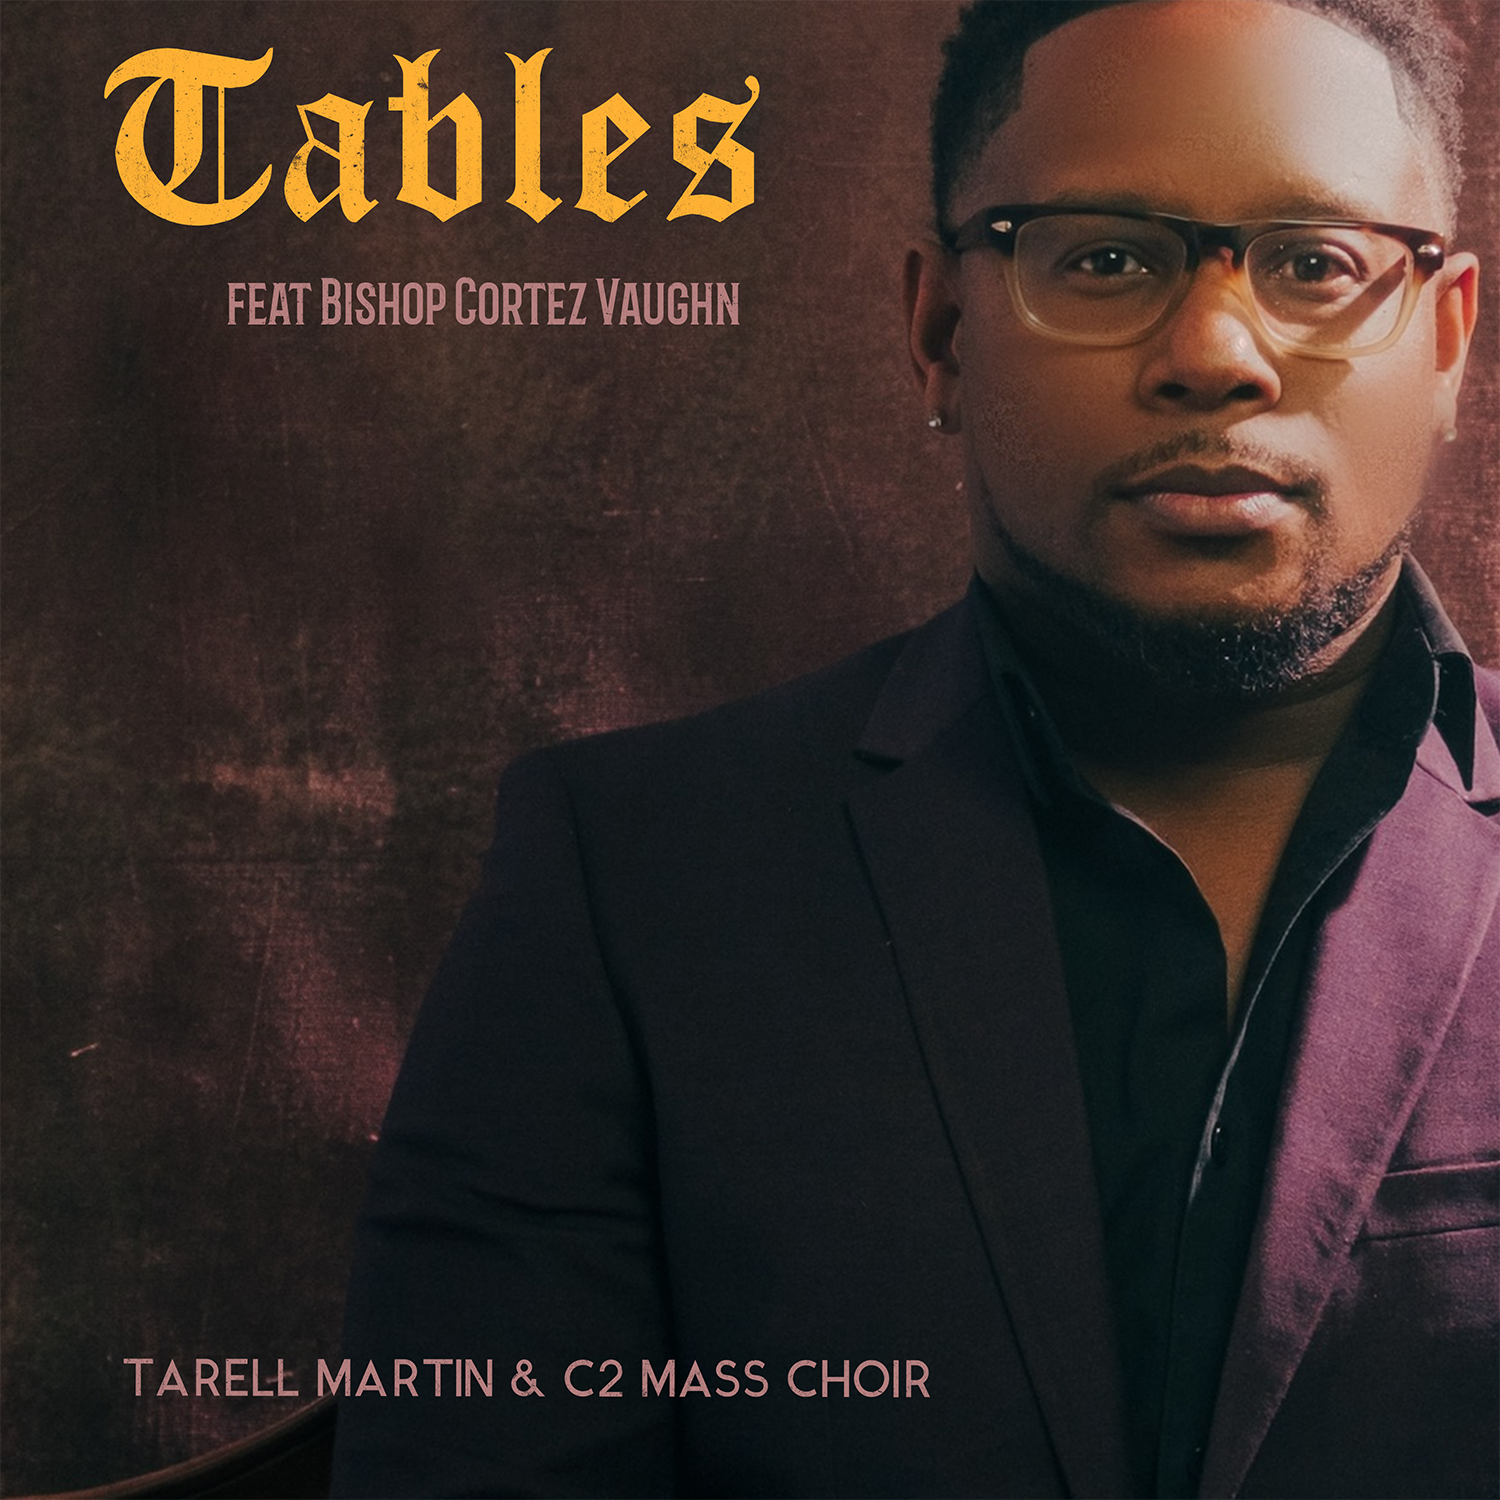 New Music: “Tables” featuring Bishop Cortez Vaughn